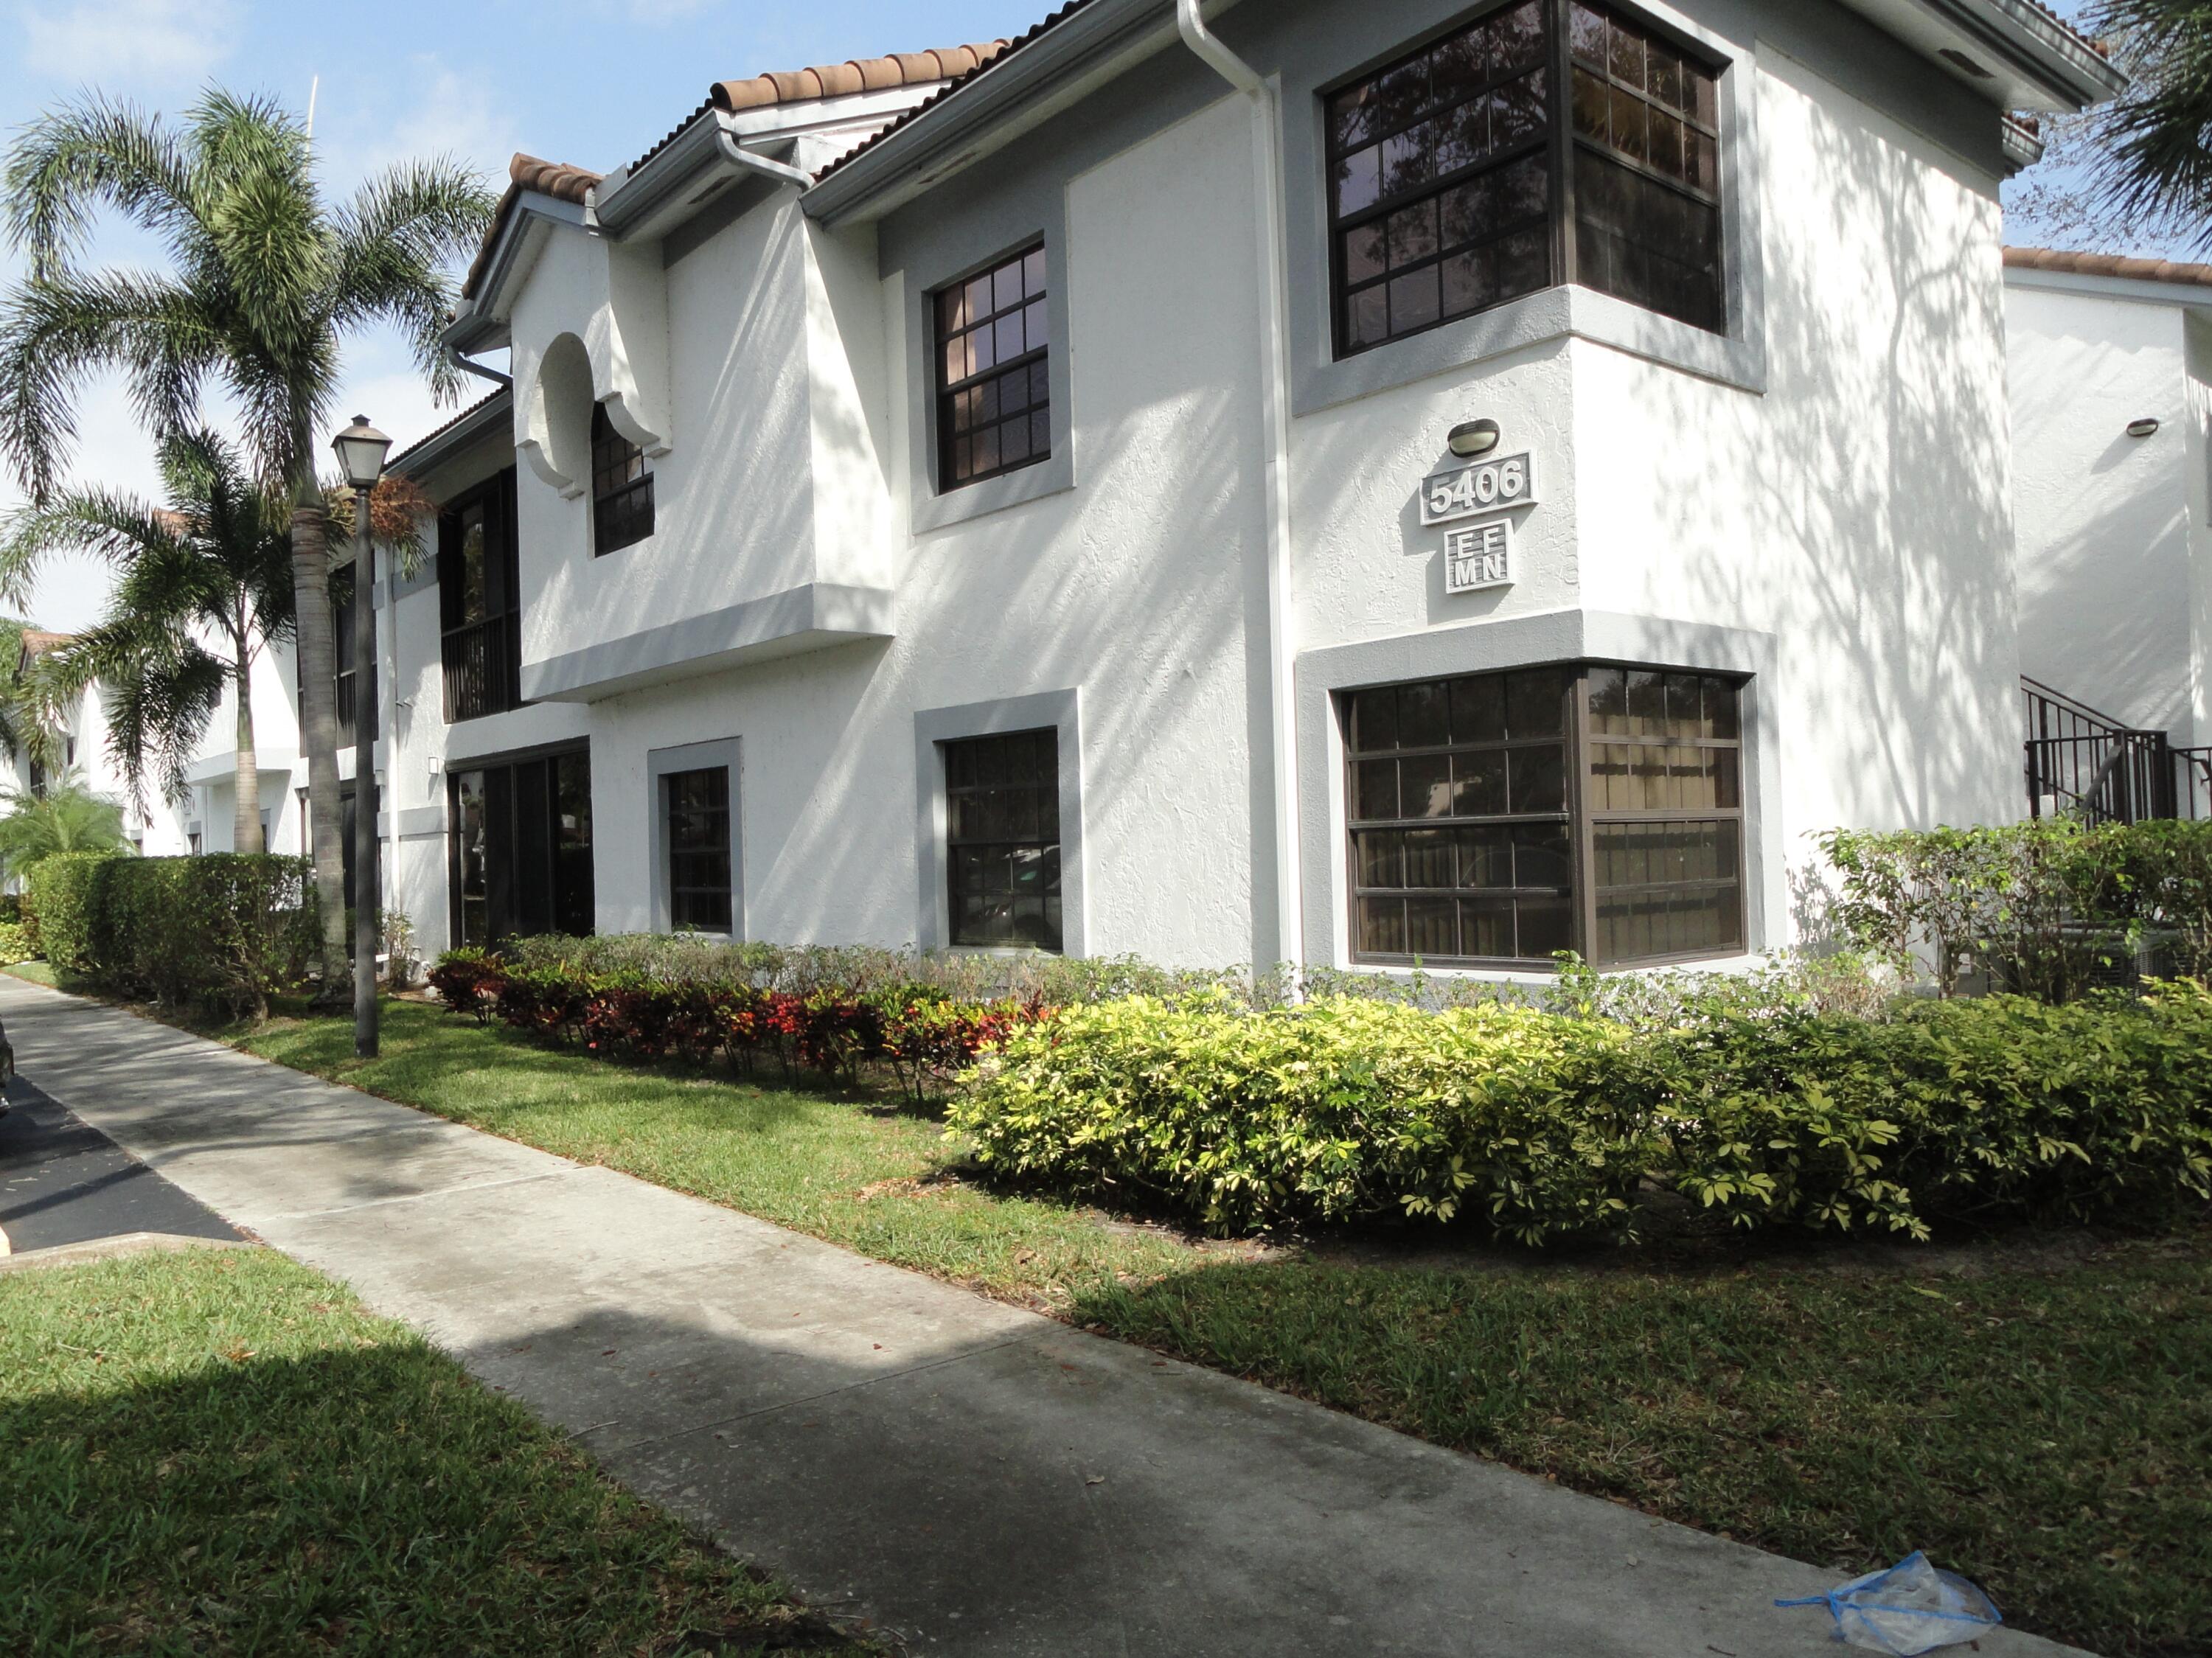 Property for Sale at 5406 Firenze Drive, Boynton Beach, Palm Beach County, Florida - Bedrooms: 3 
Bathrooms: 2  - $289,900